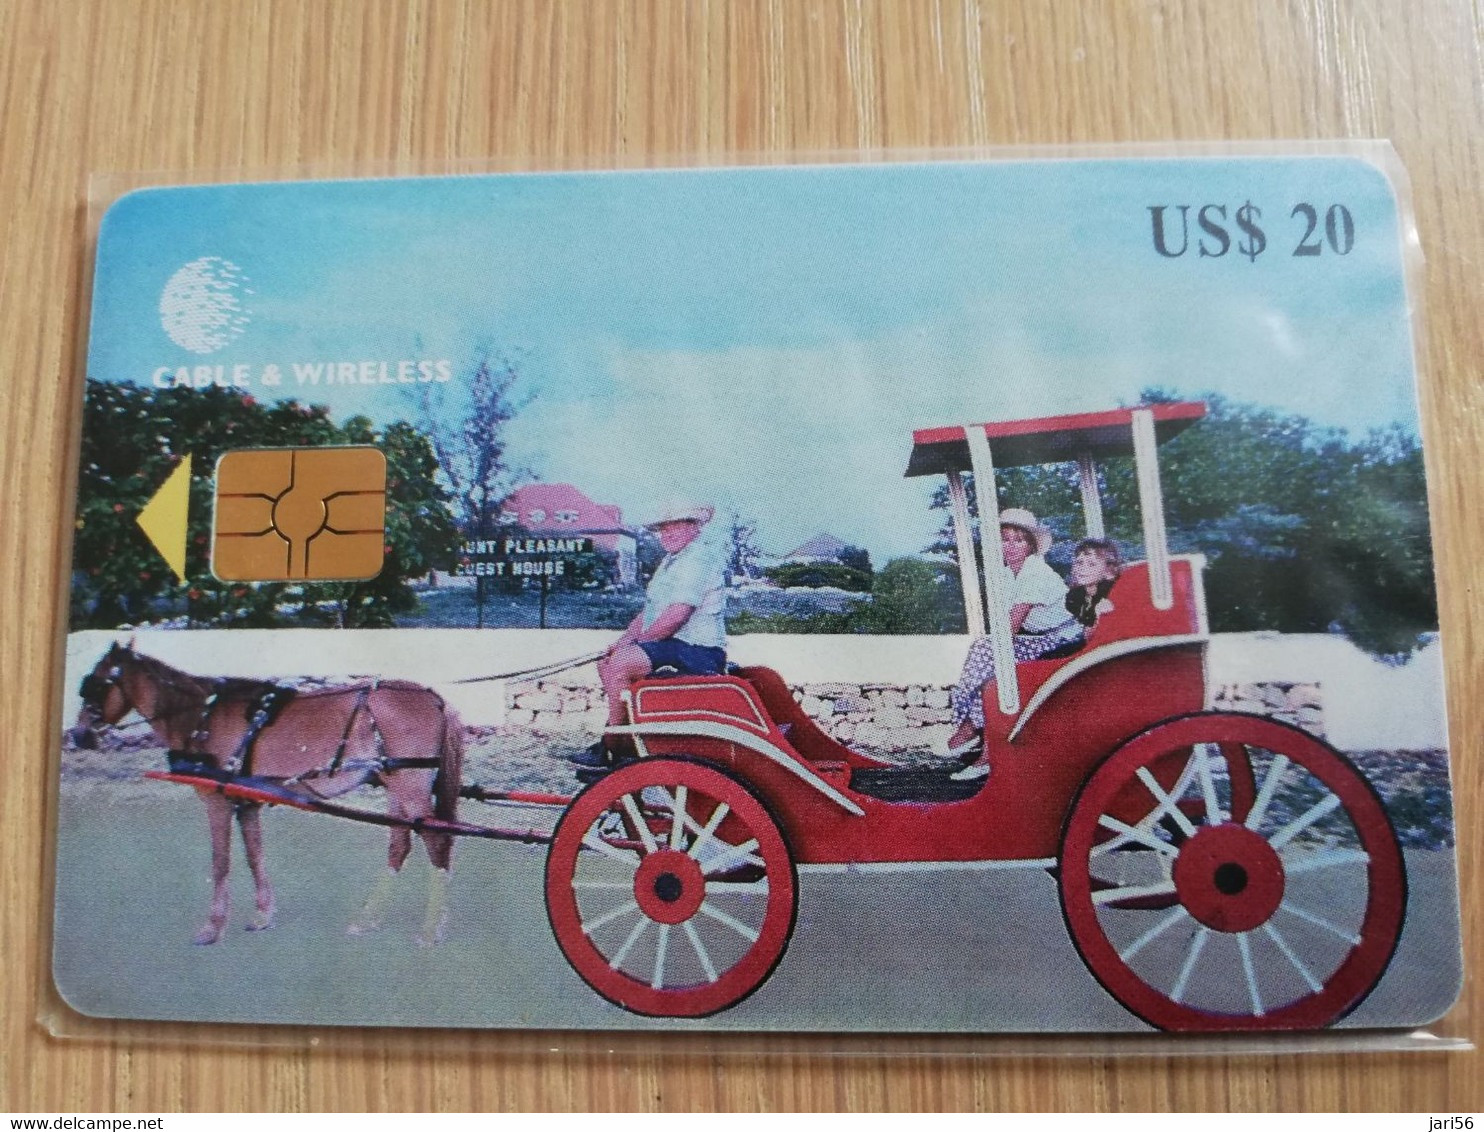 TURKS & CAICOS ISLANDS $ 20,00  CHIP  CARD  HORSE CART WITH LOGO     T&C -C3  GEM6     Fine Used  Card  **3317** - Turks And Caicos Islands